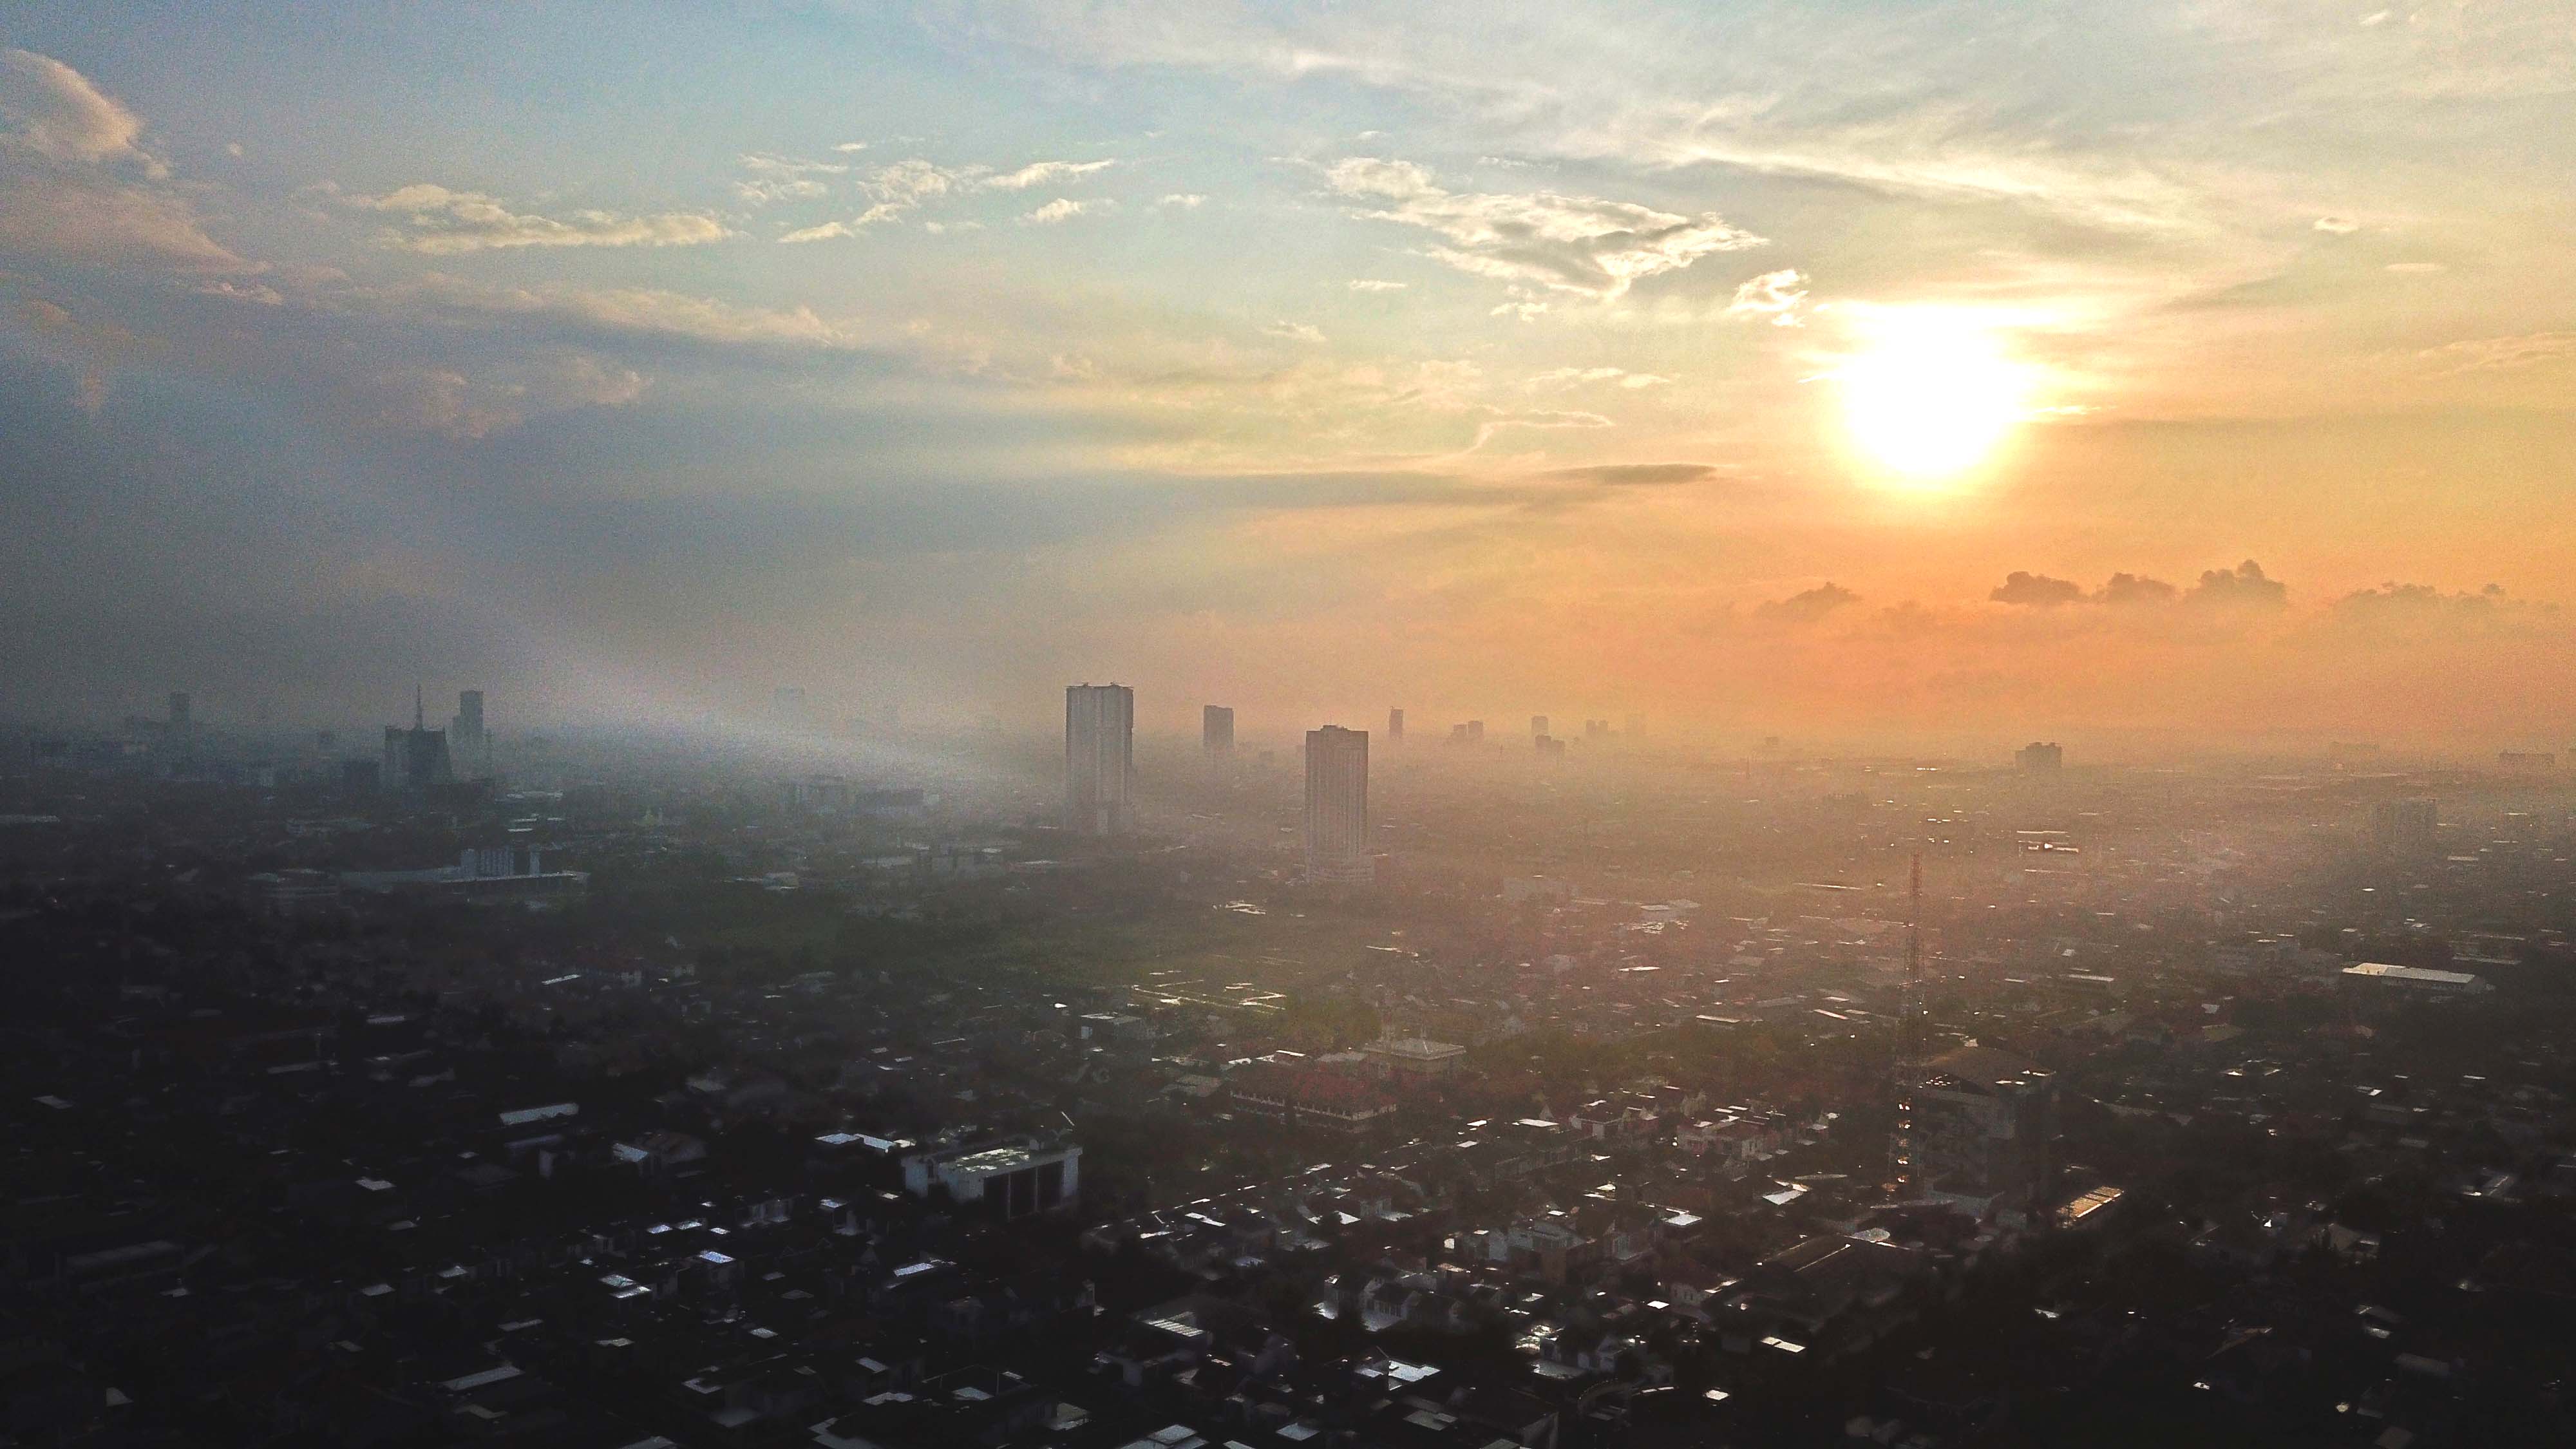 Turun Peringkat! Kualitas Udara Jakarta Pagi Ini Lebaik Baik dari Kuching dan Wuhan